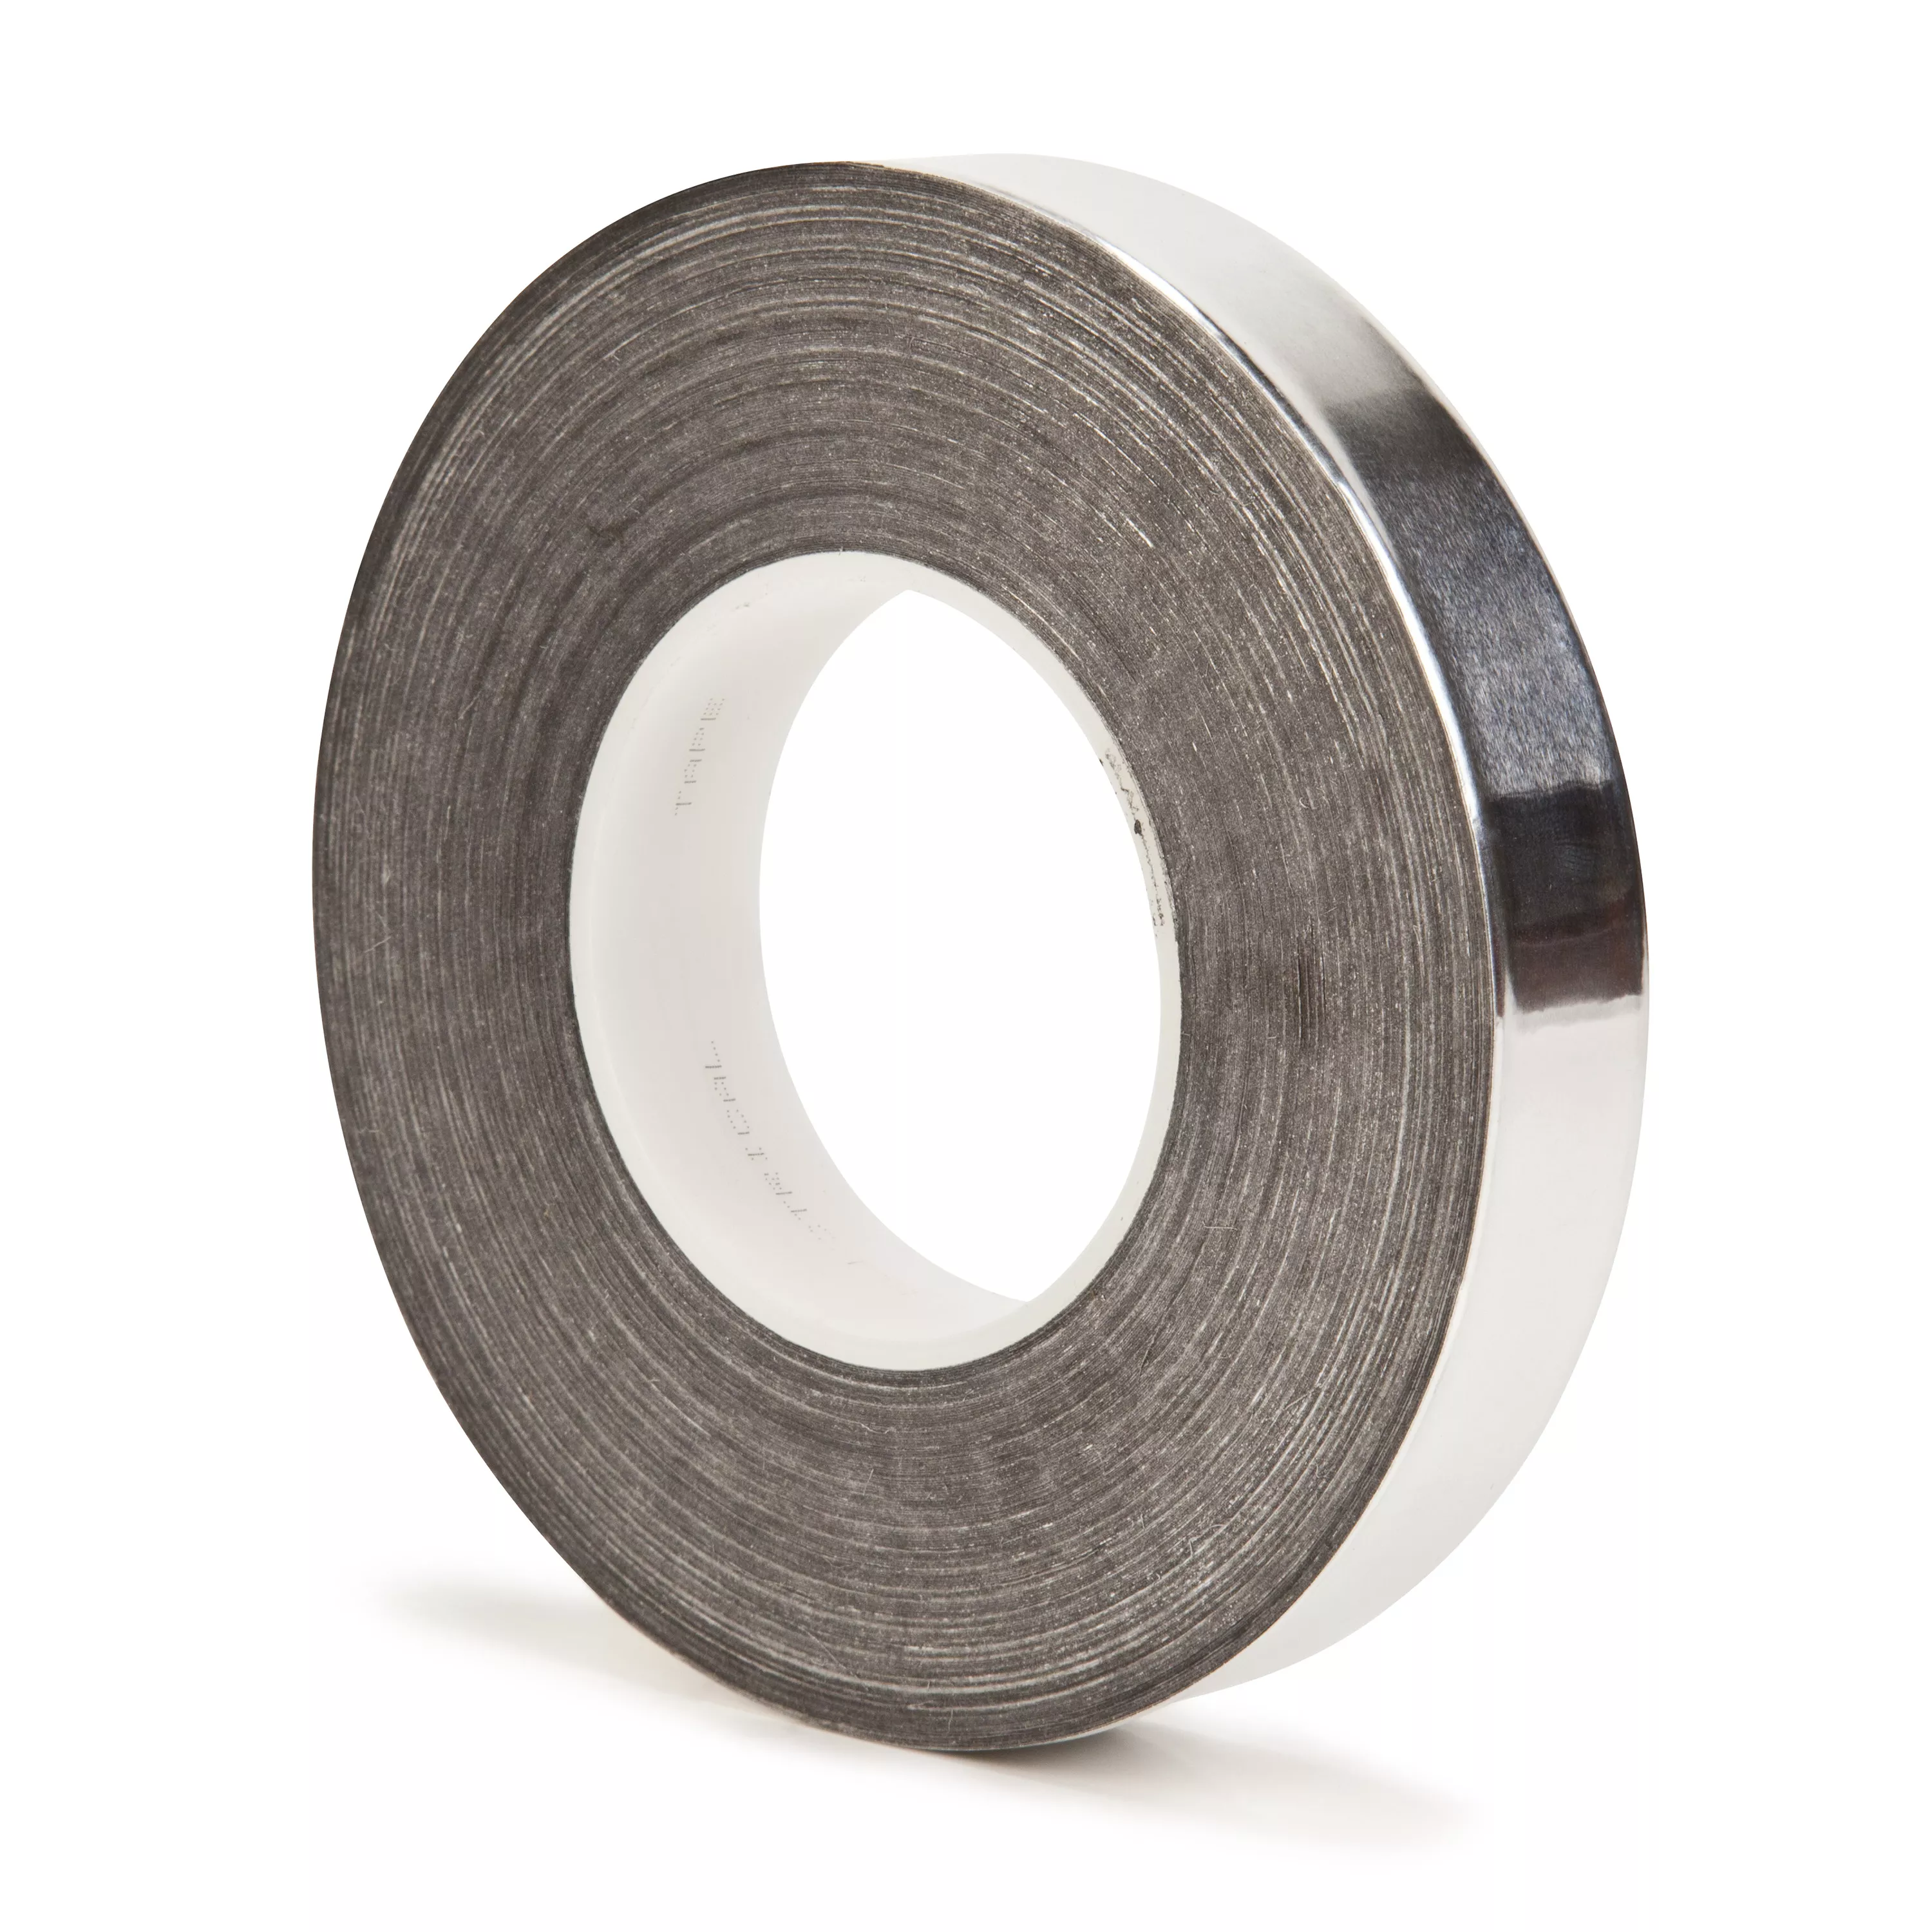 3M™ Aluminum Foil Tape 1115B, 6 in x 60 yd, 4.5 mil, 3 in core, Silver,
2 Rolls/Case